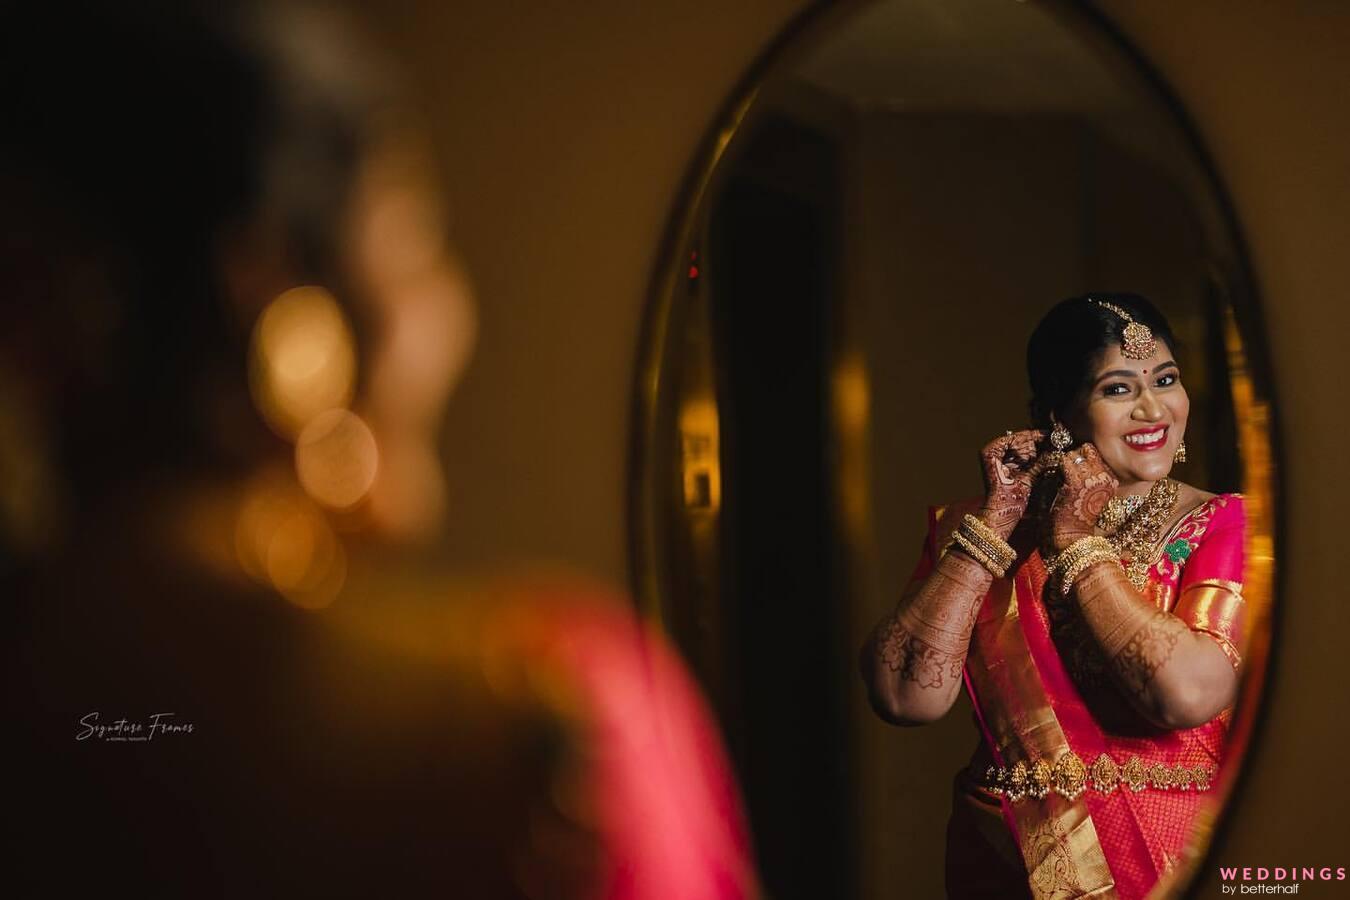 Pin by AlmeenaYadhav on Couples❤️ | Wedding photoshoot poses, Wedding  couple poses, Indian wedding photography poses